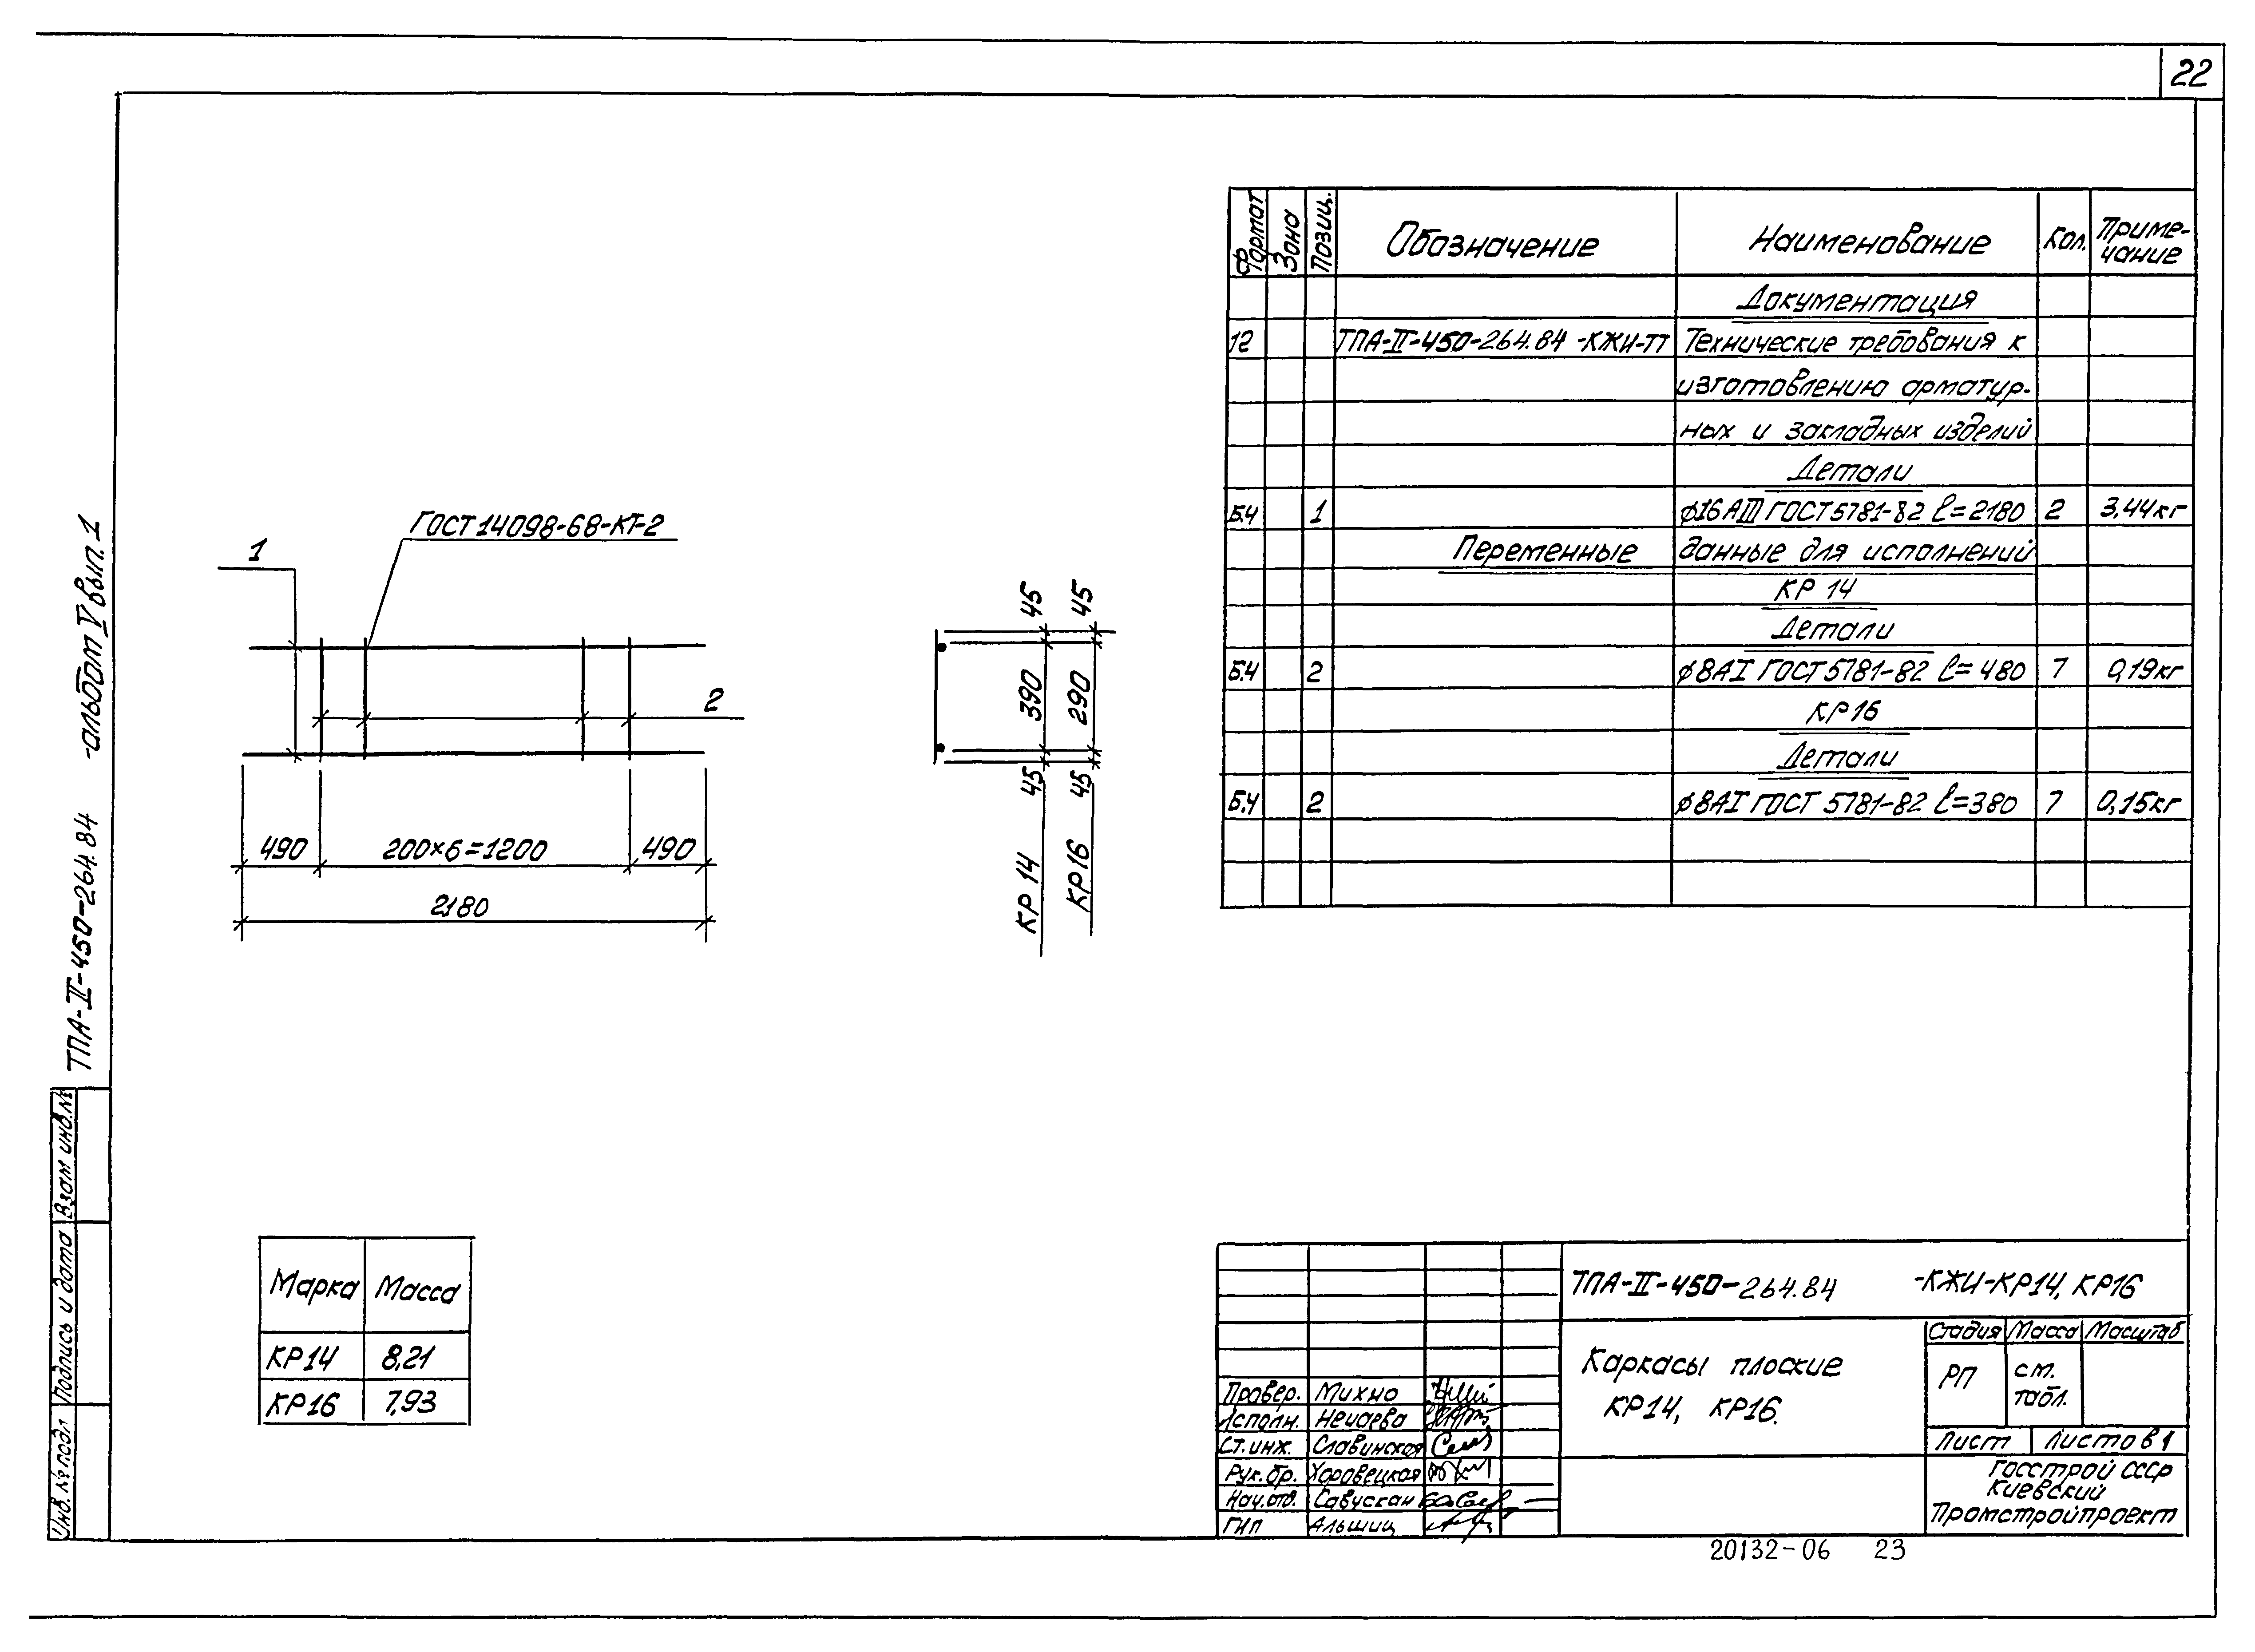 Типовой проект А-II-450-264.84